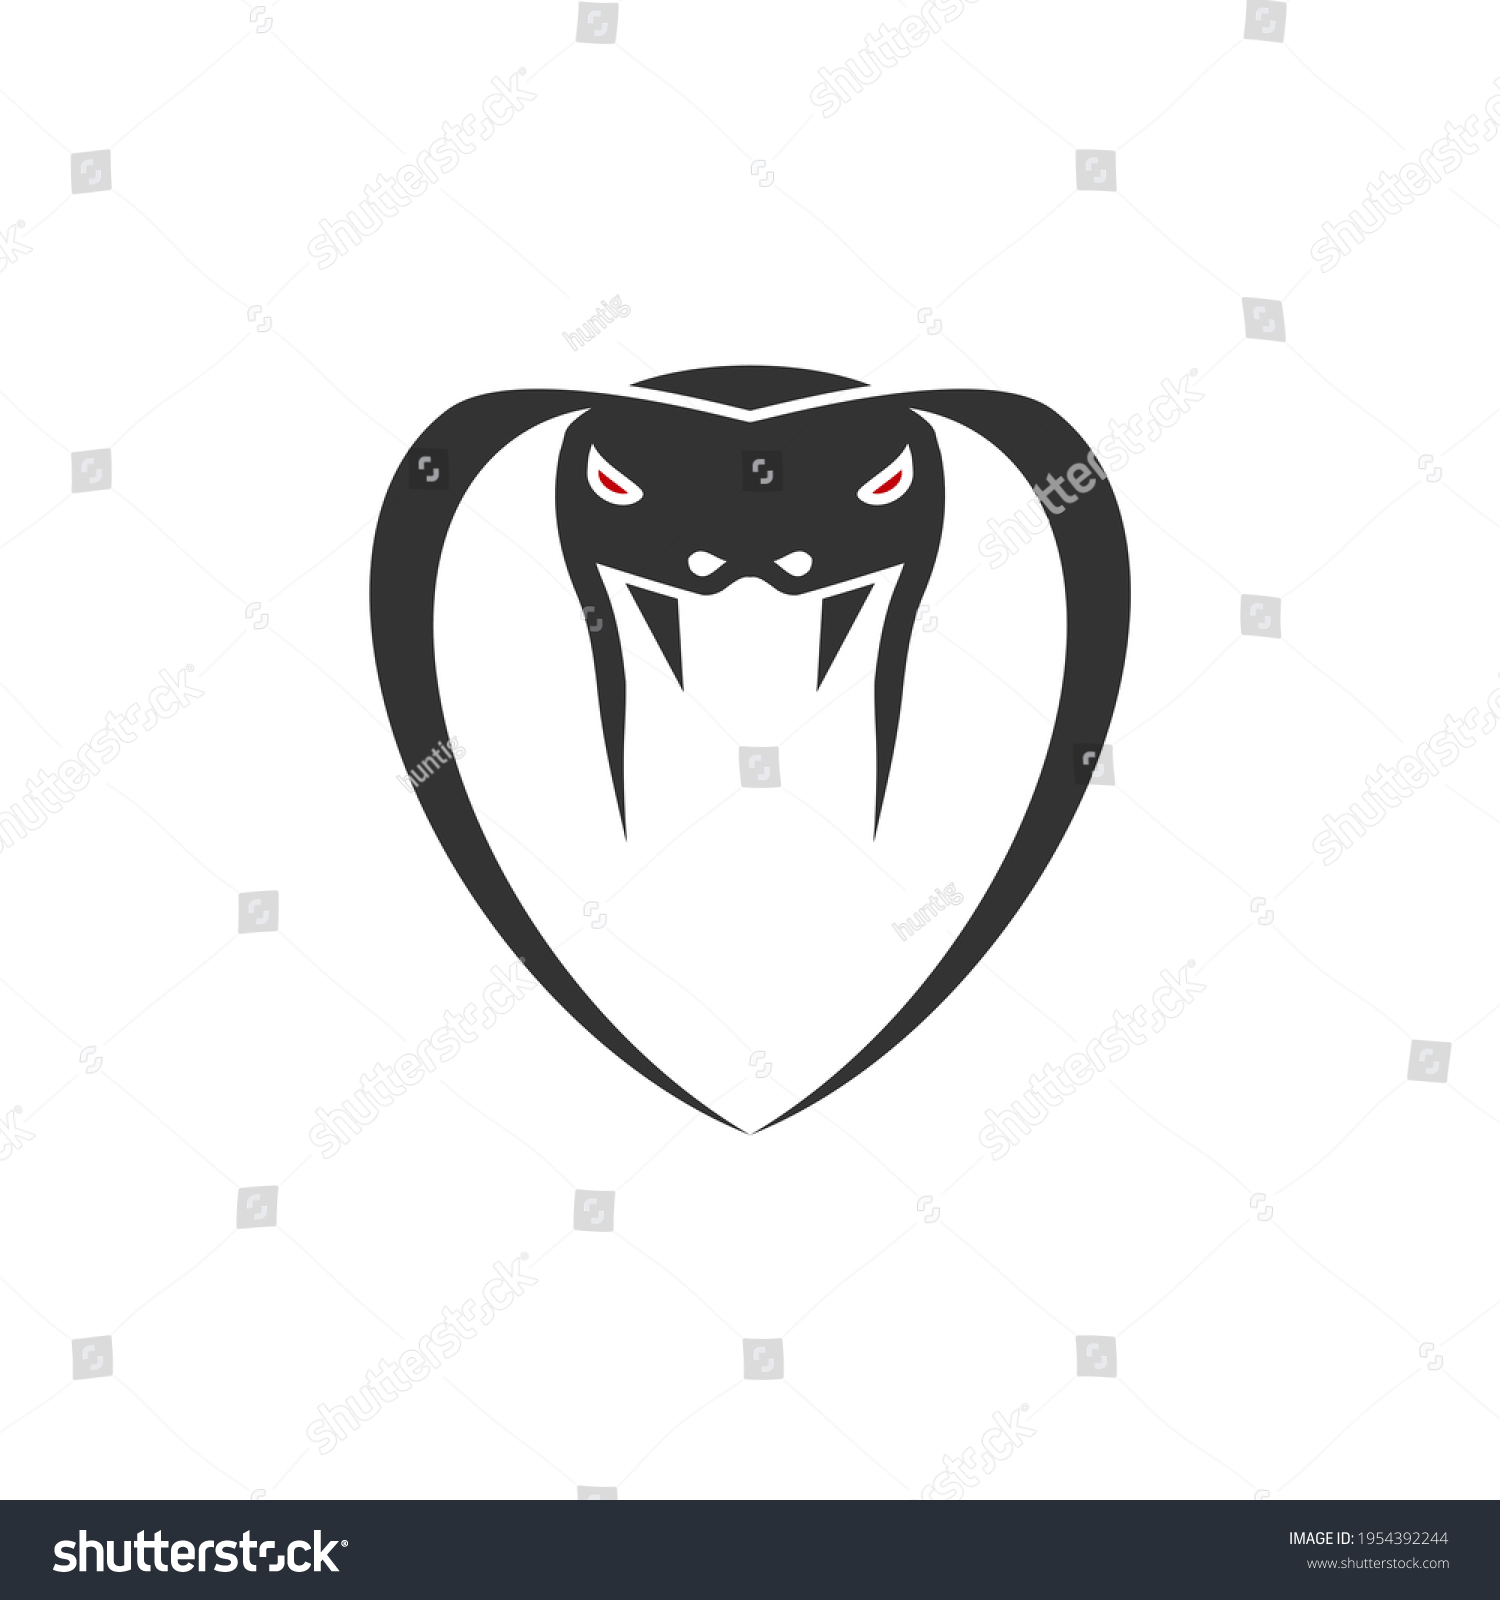 SVG of illustration vector graphic of modern cobra head logo svg